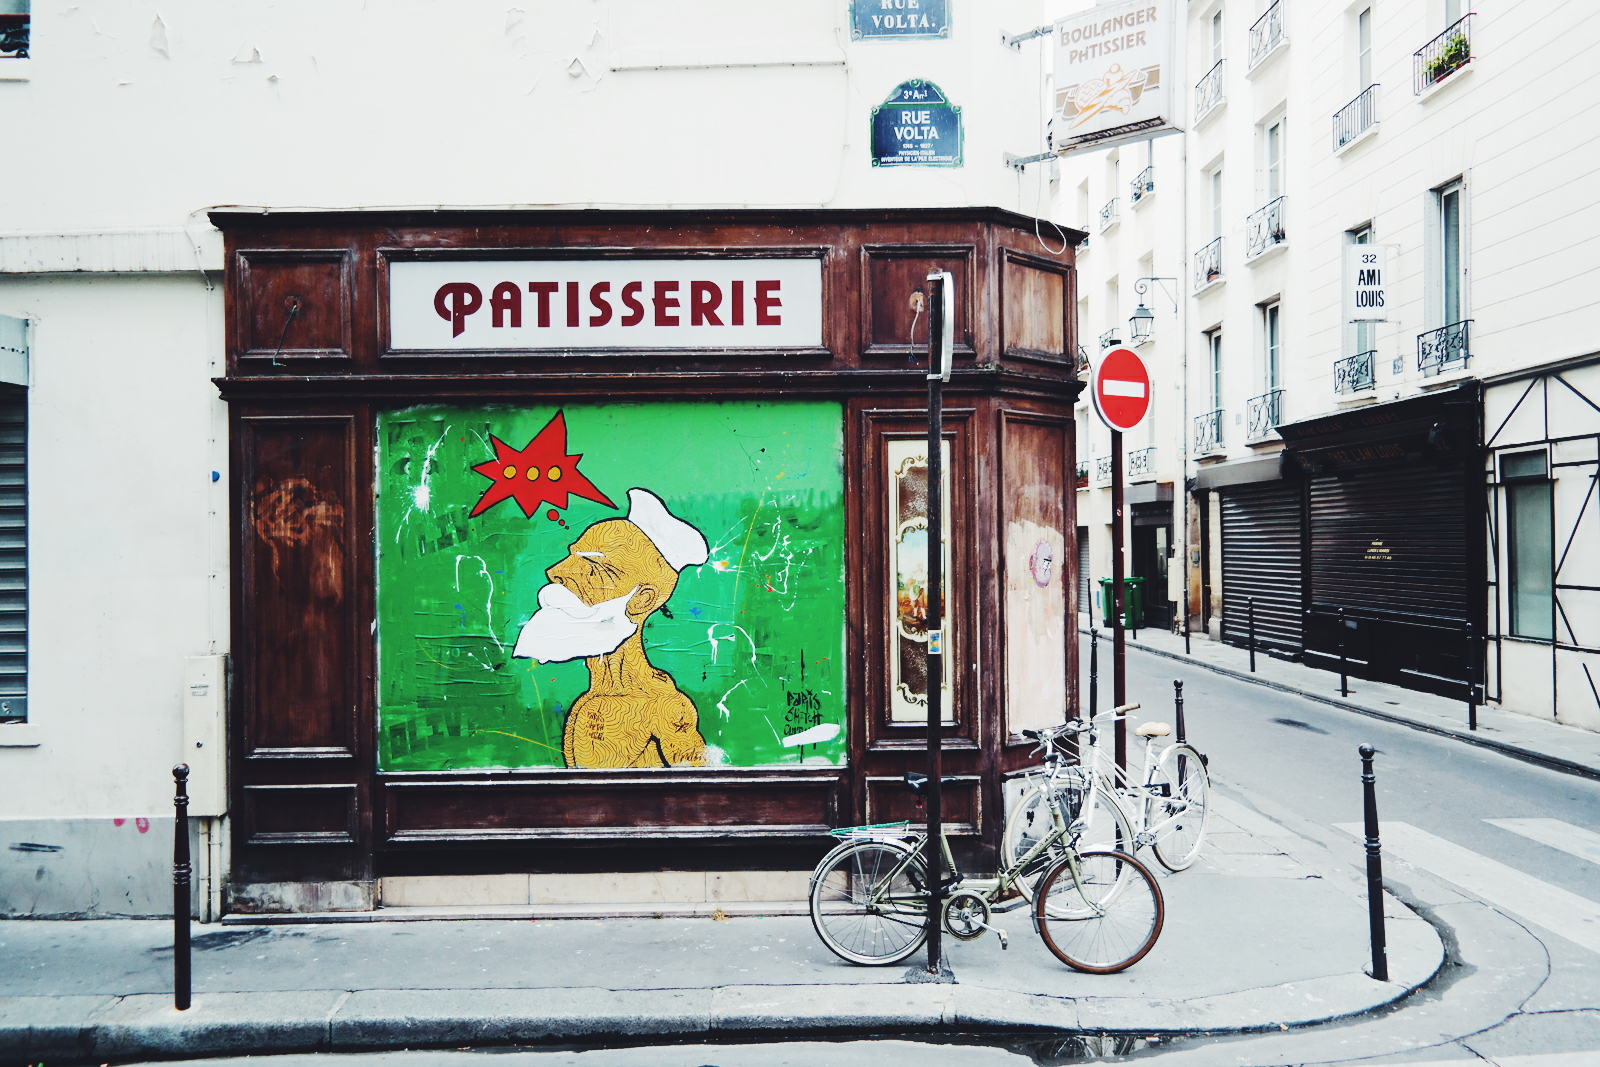 French-sailor-marin-barbu-et-français-by-Paris-Sketch-Culture-Raphael-Federici-Patisserie-Rue-Volta-graffiti-street-art-wall-street-photography-by-United-States-of-Paris-blog